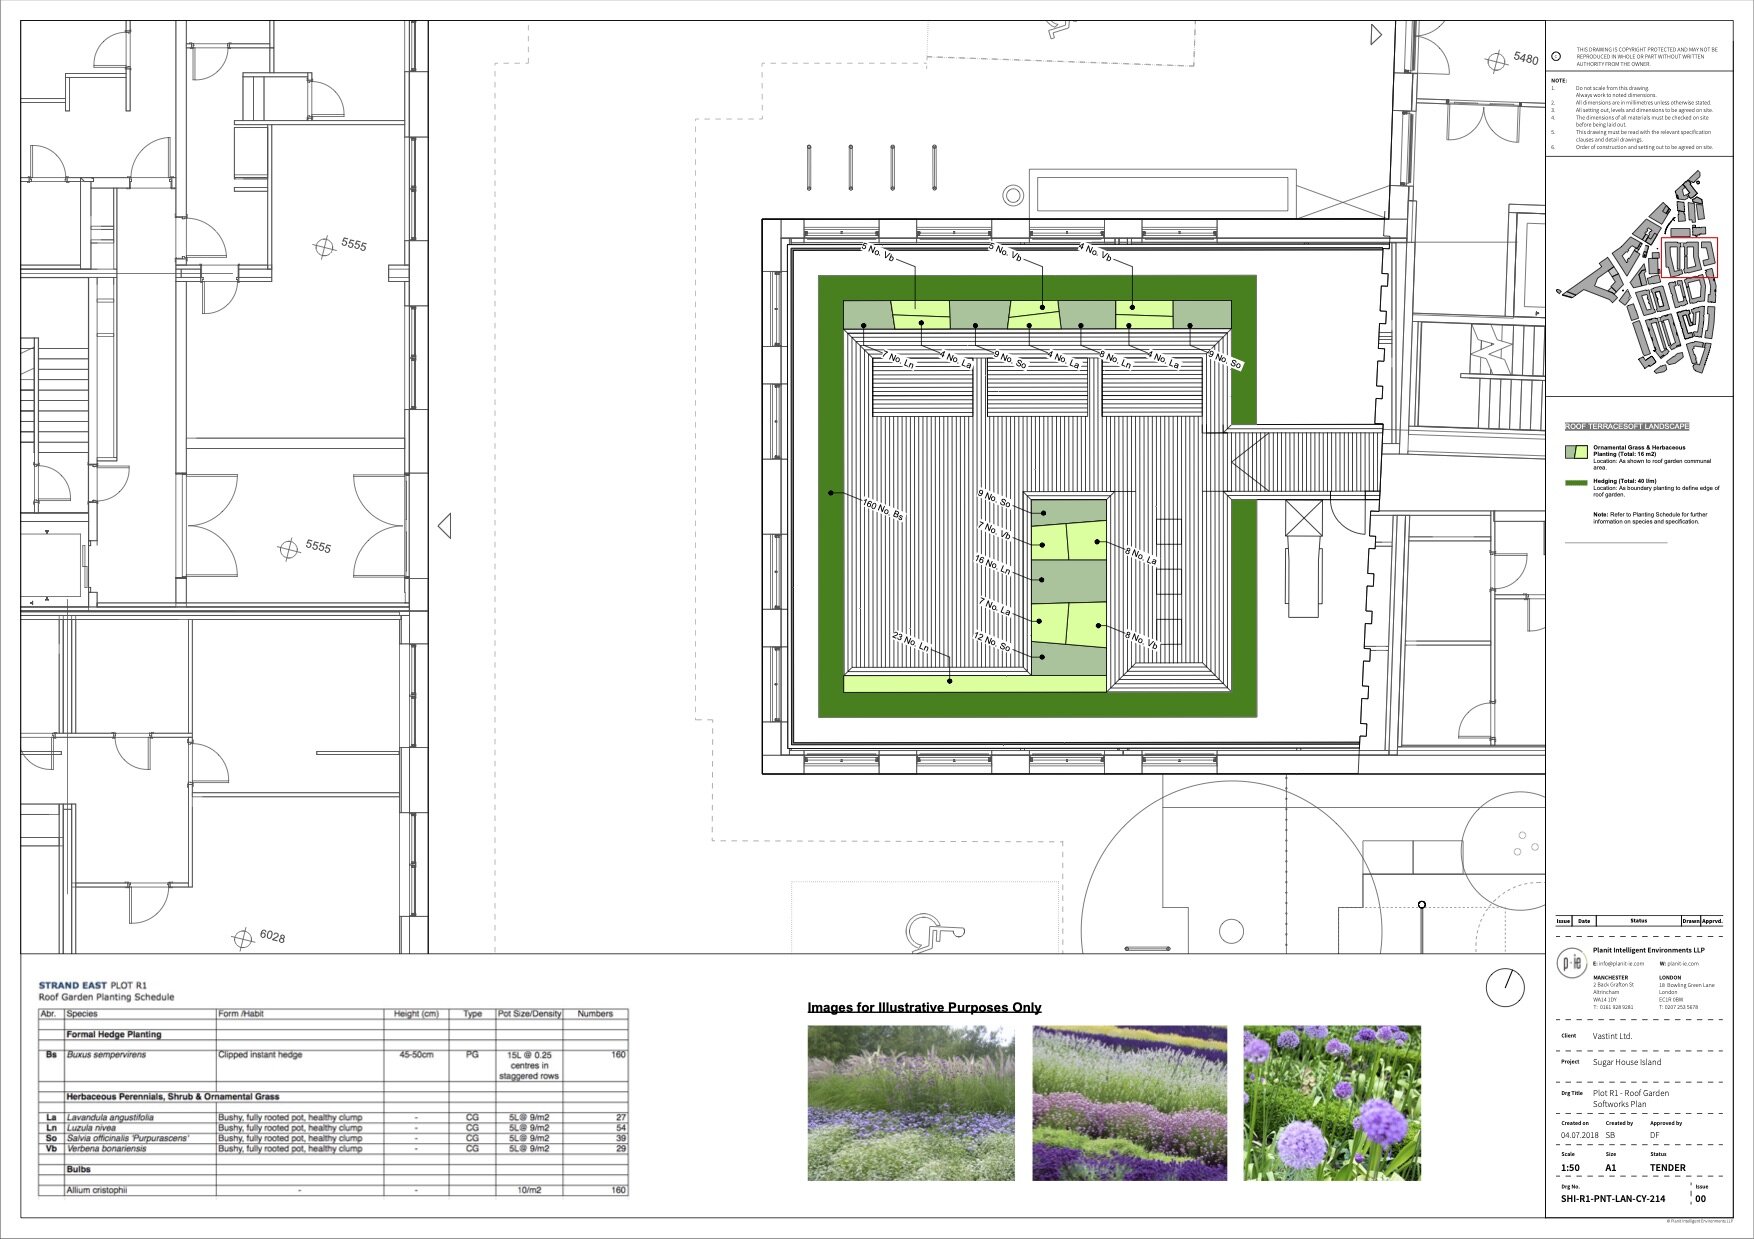 SHI-R1-PNT-LAN-CY-214-Plot R1 Roof Garden - Softworks Plan.jpg